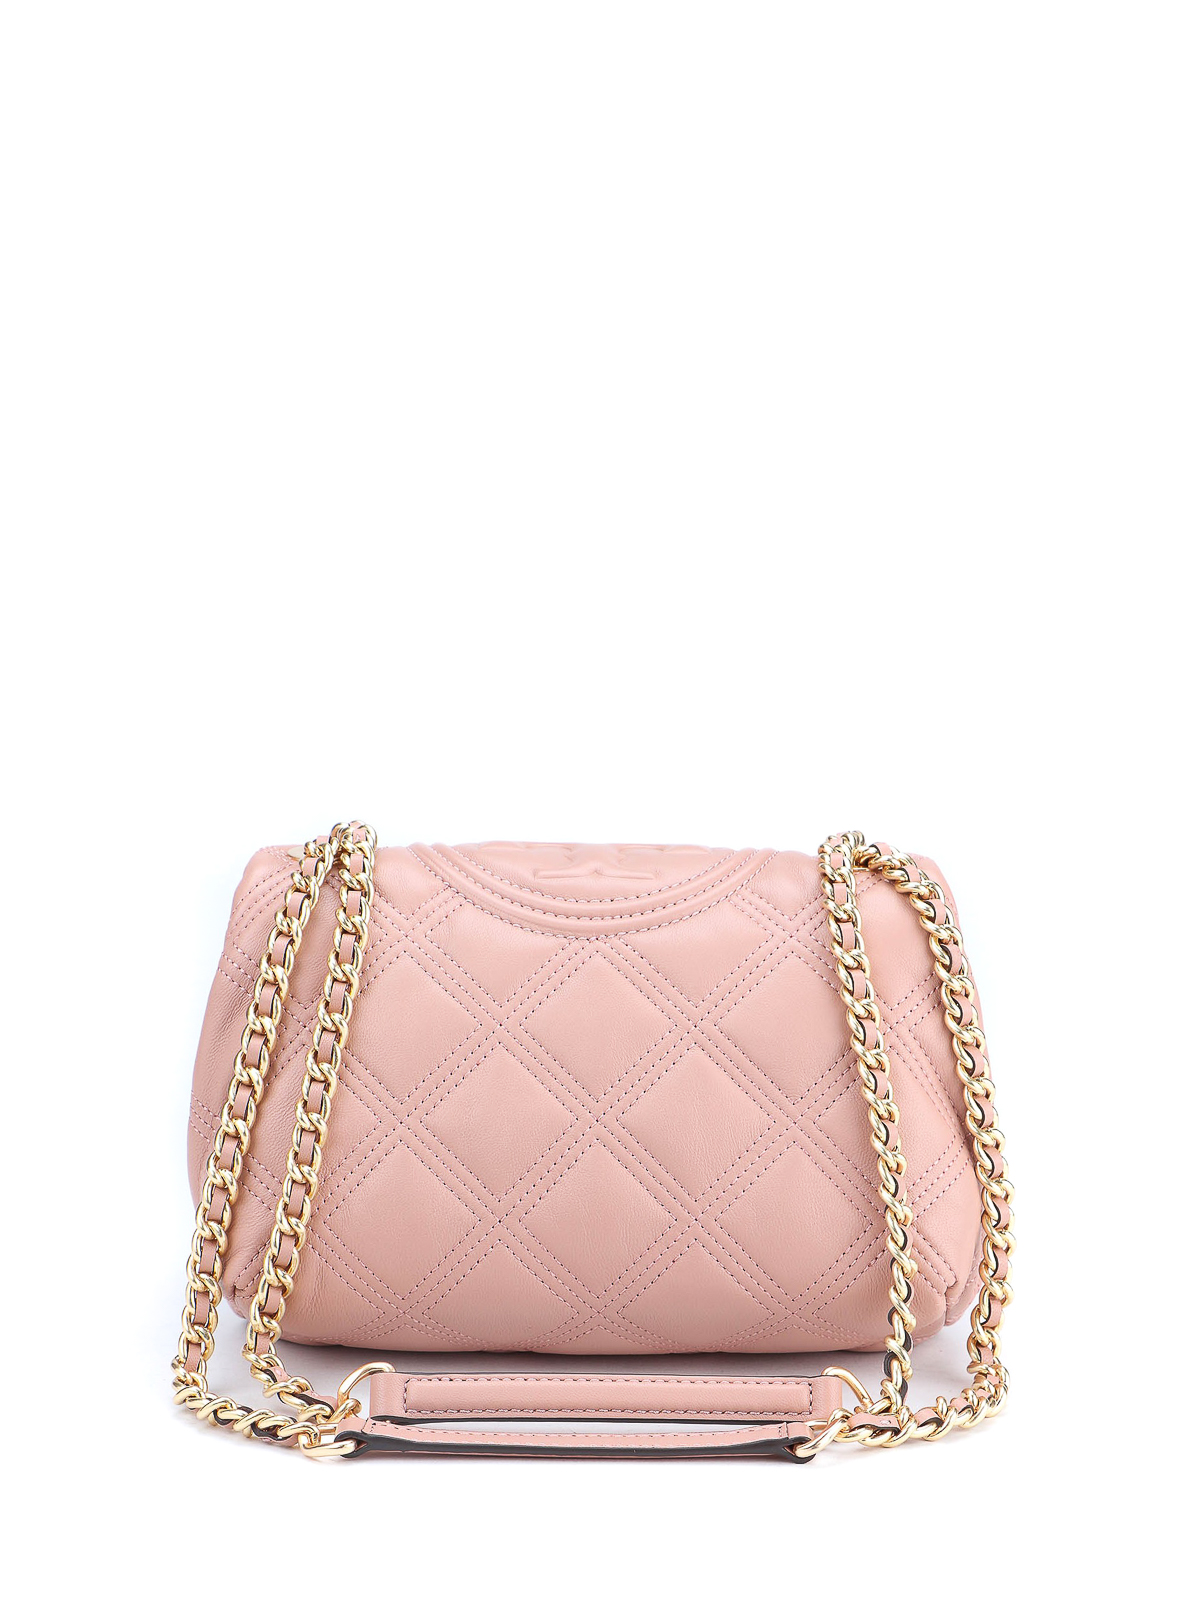 Light pink Tory Burch crossbody purse 